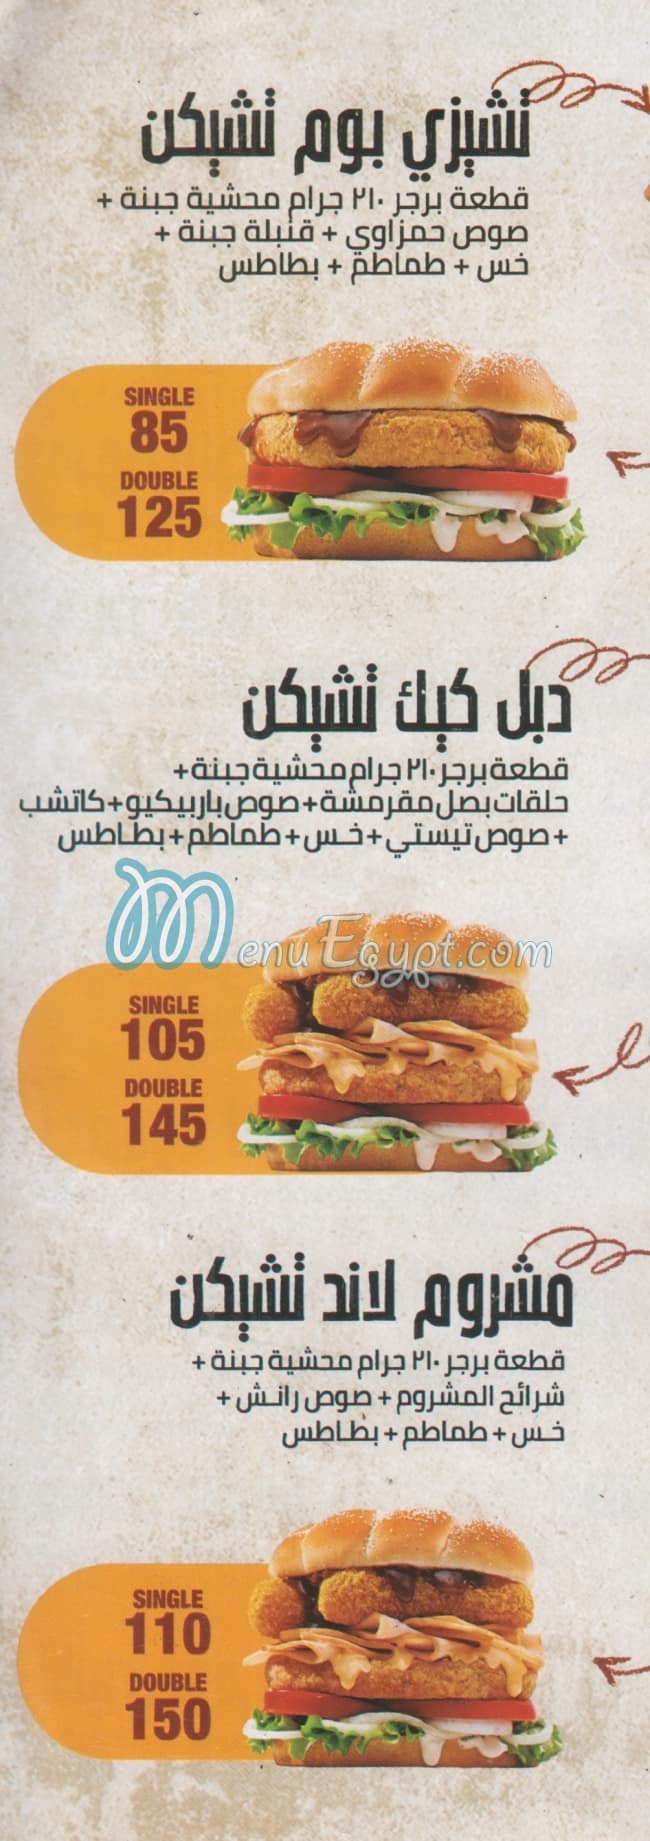 Hamzawy Burger online menu